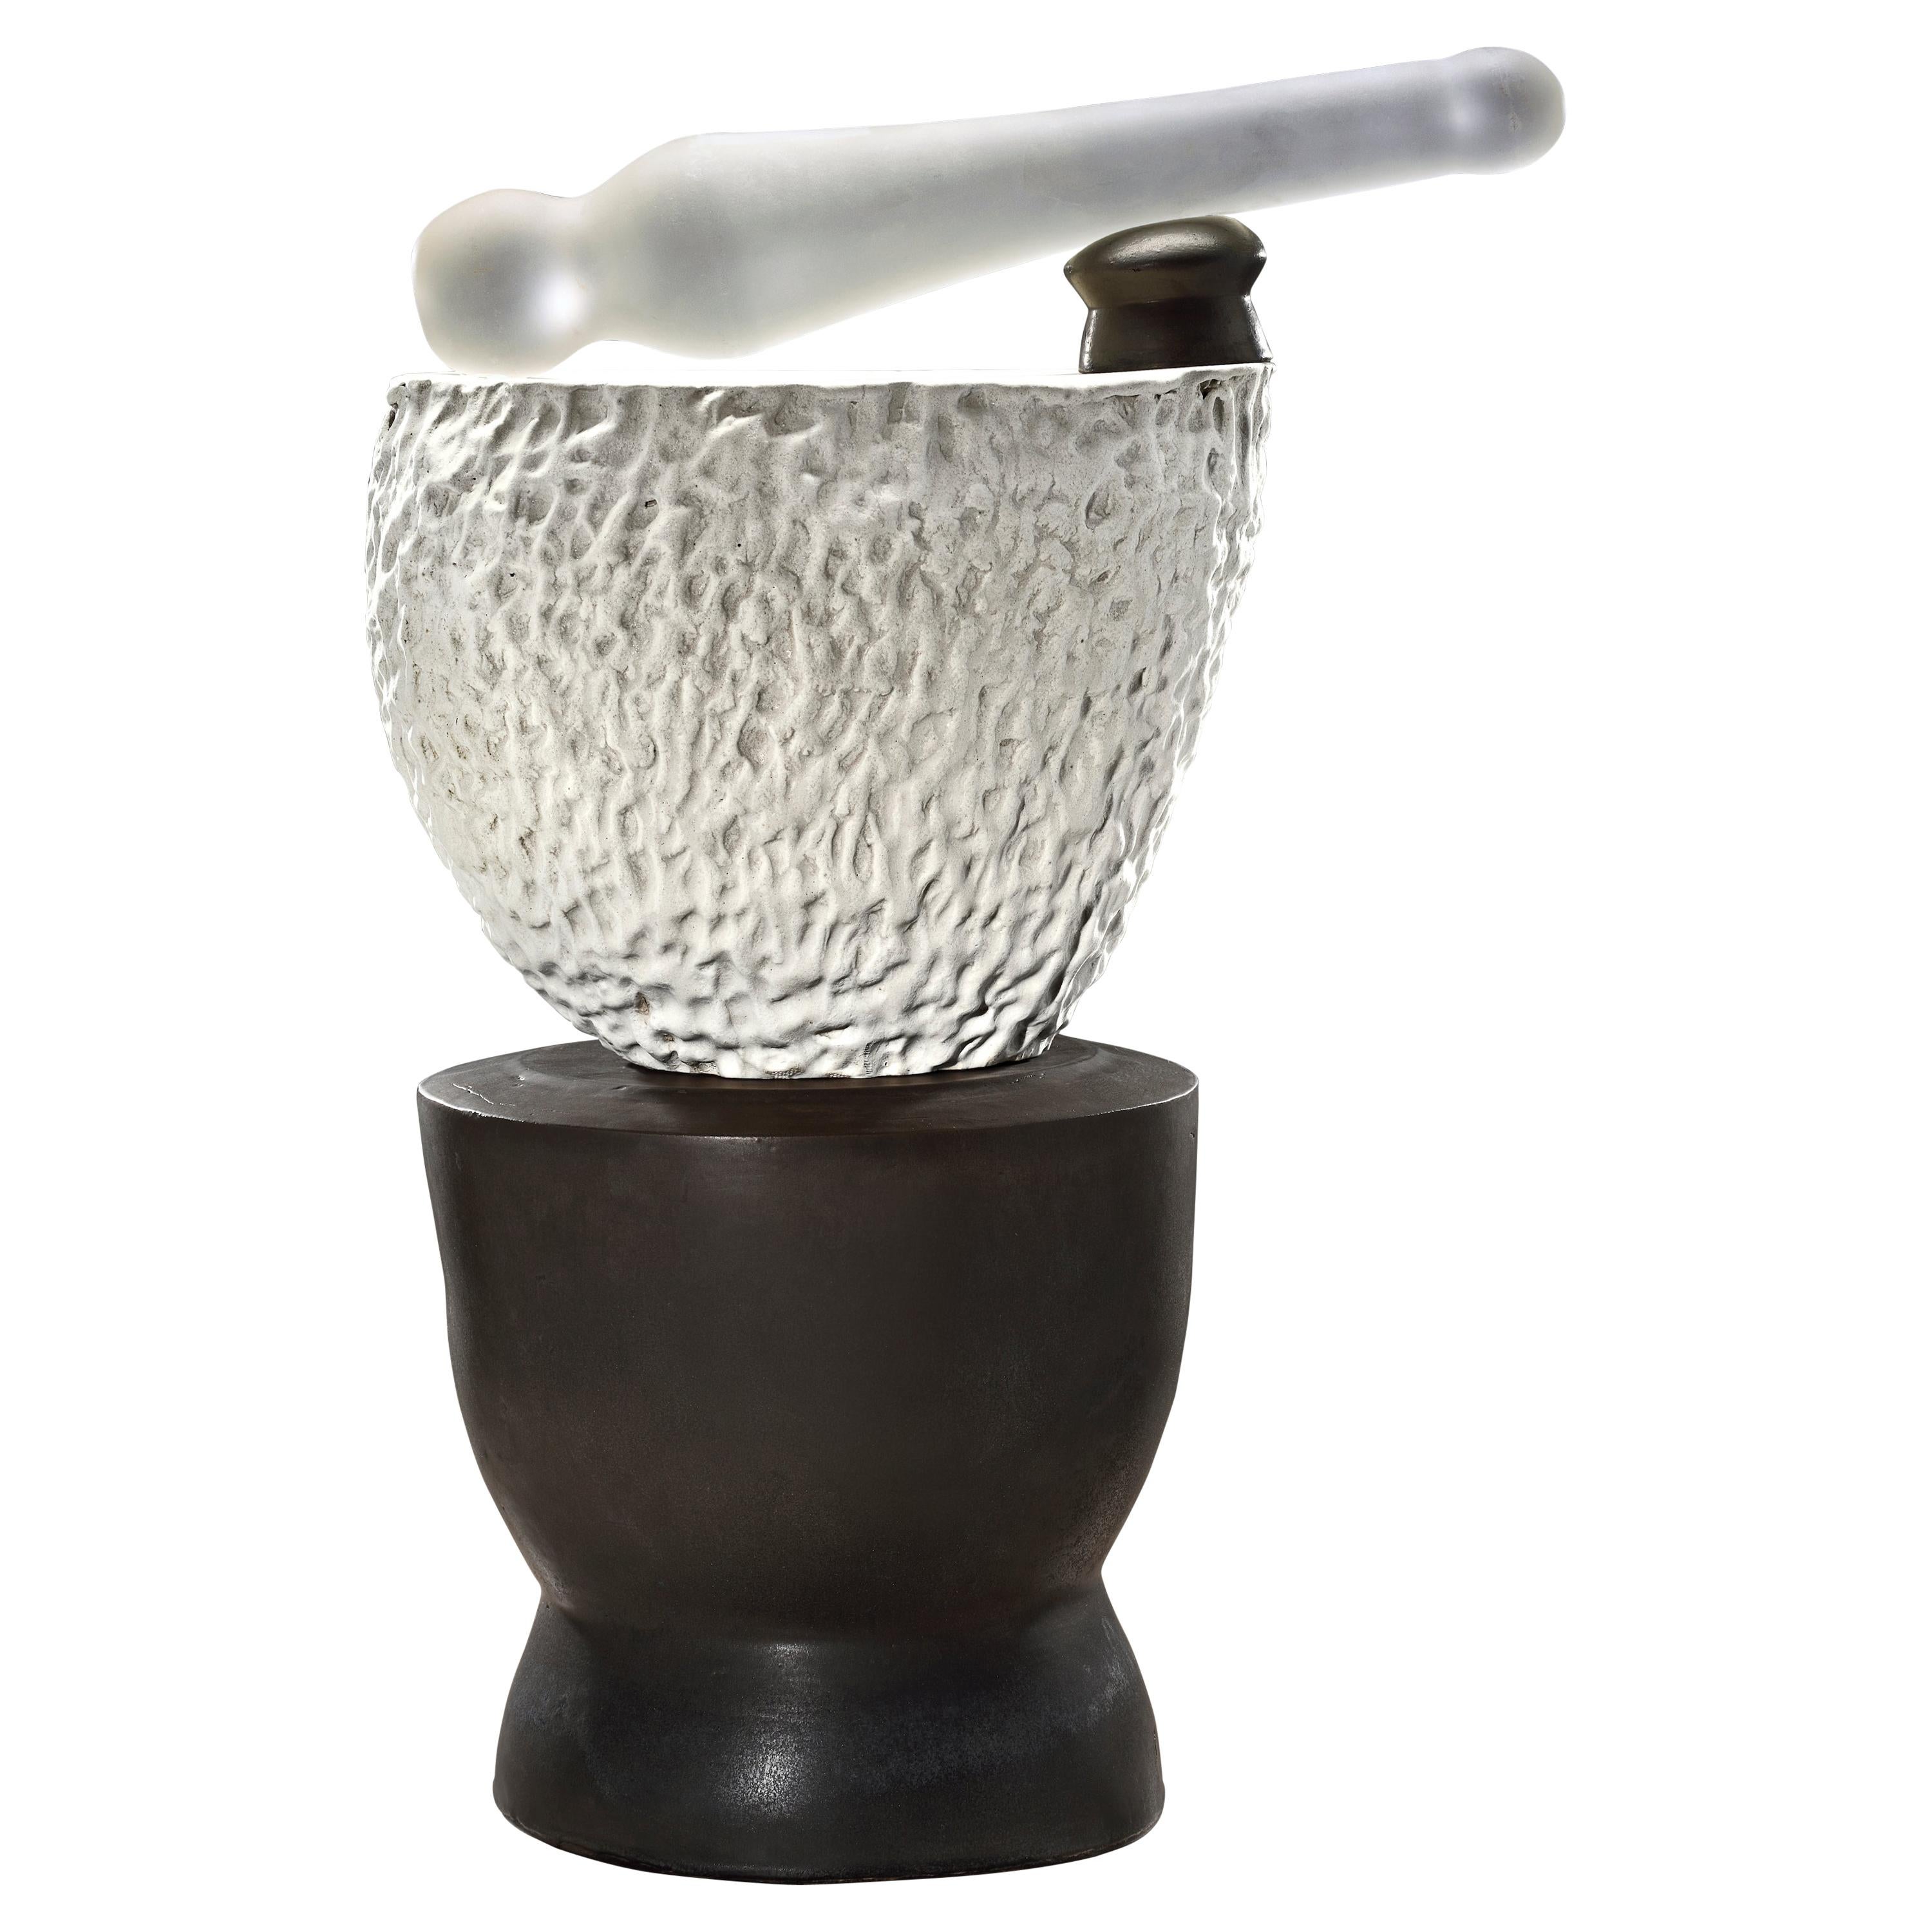 Richard Hirsch Ceramic Mortar and Glass Pestle Sculpture #5, 2020 For Sale